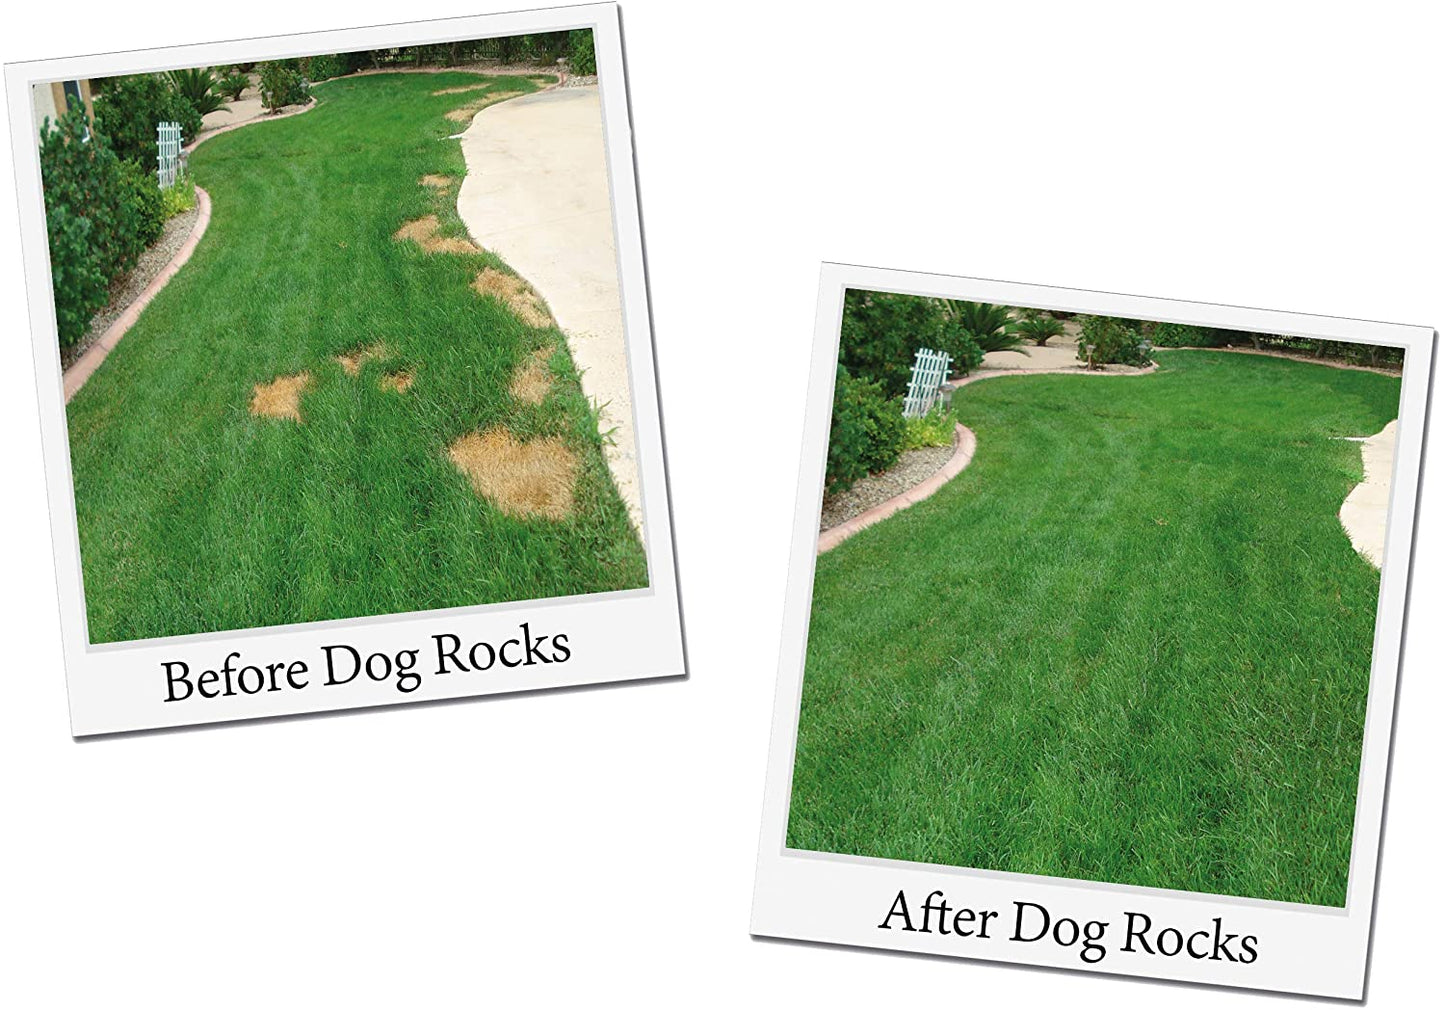 Dog Rocks Lawn Savers